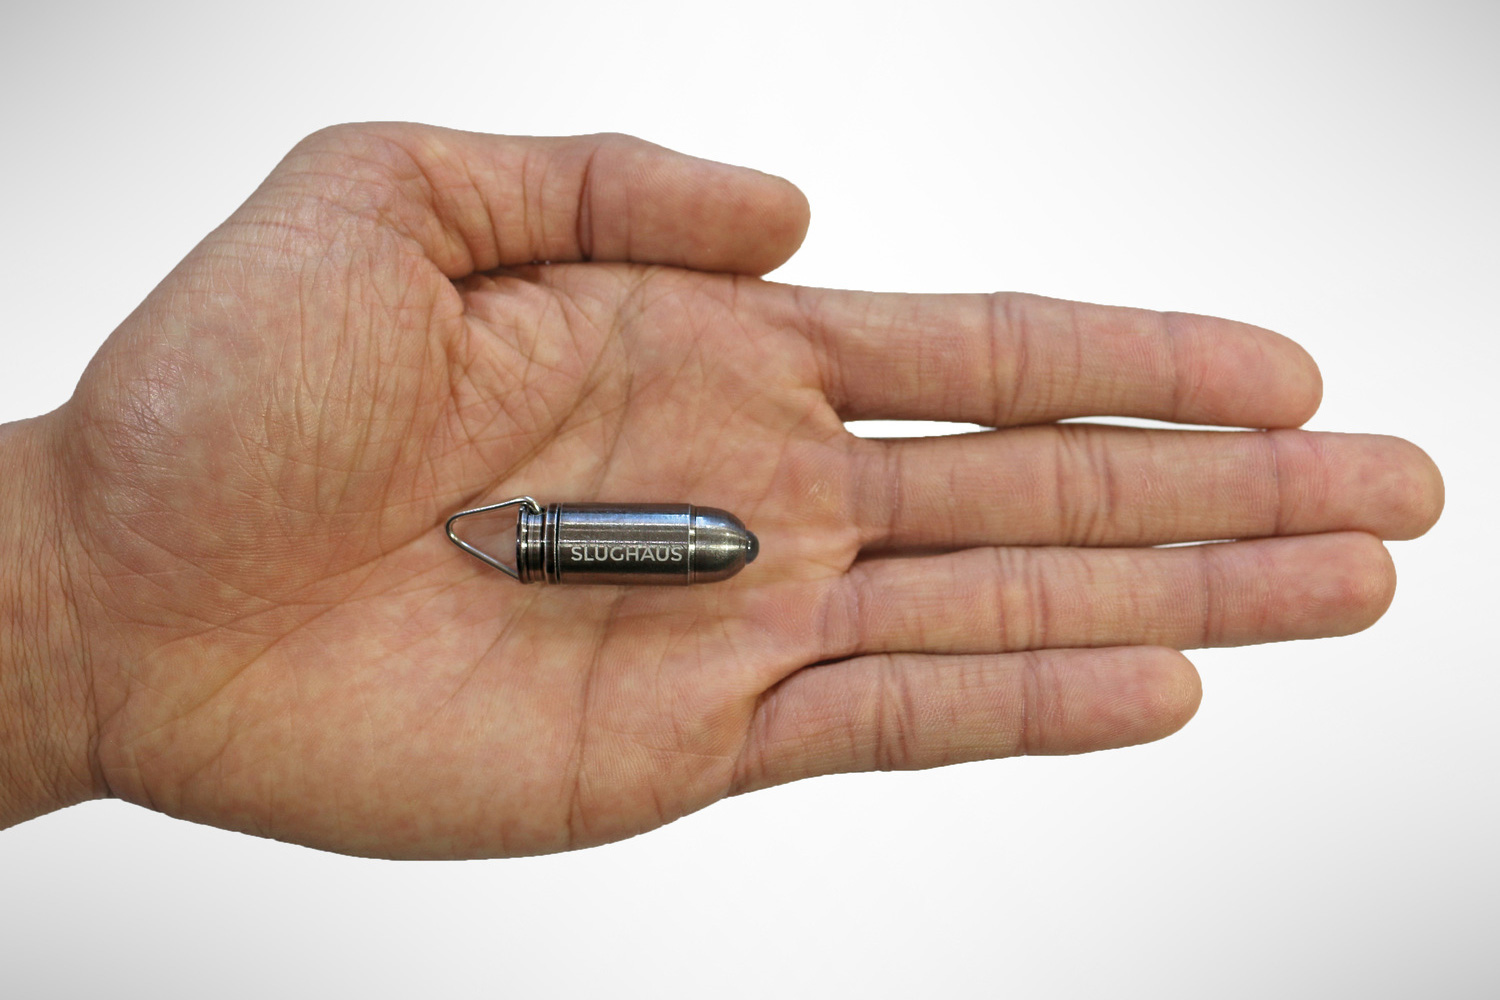 bullet worlds smallest led flashlight slughaus mini crowdfunding kickstarter 3